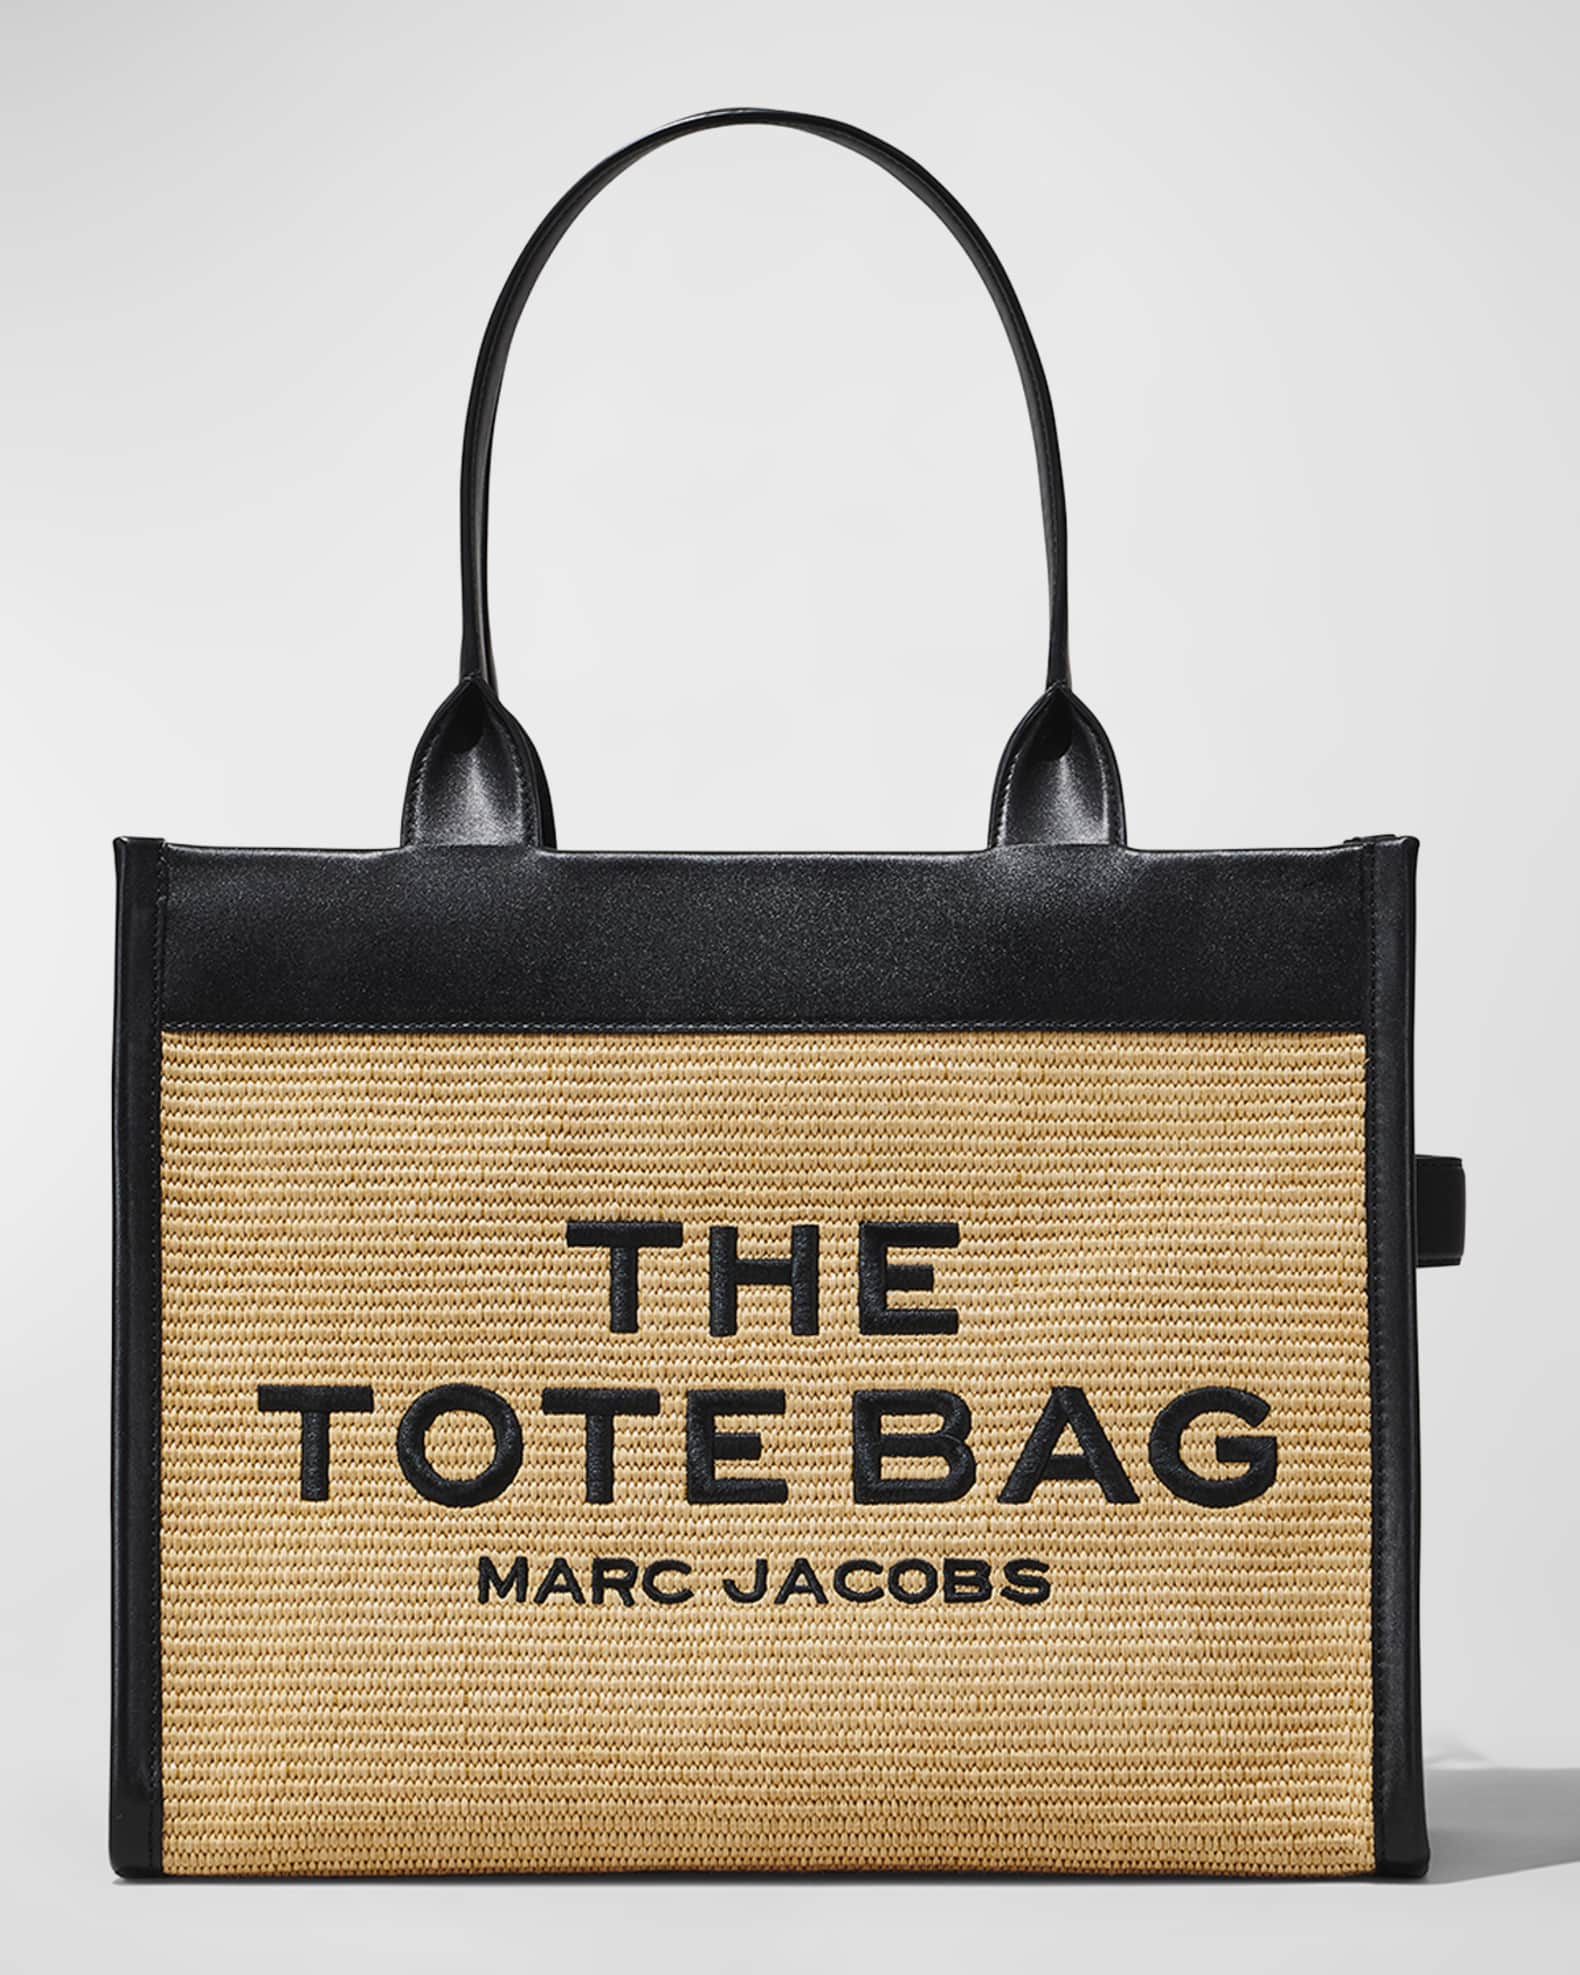 Tory Burch York Buckled Straw Tote Bag, $295, Neiman Marcus